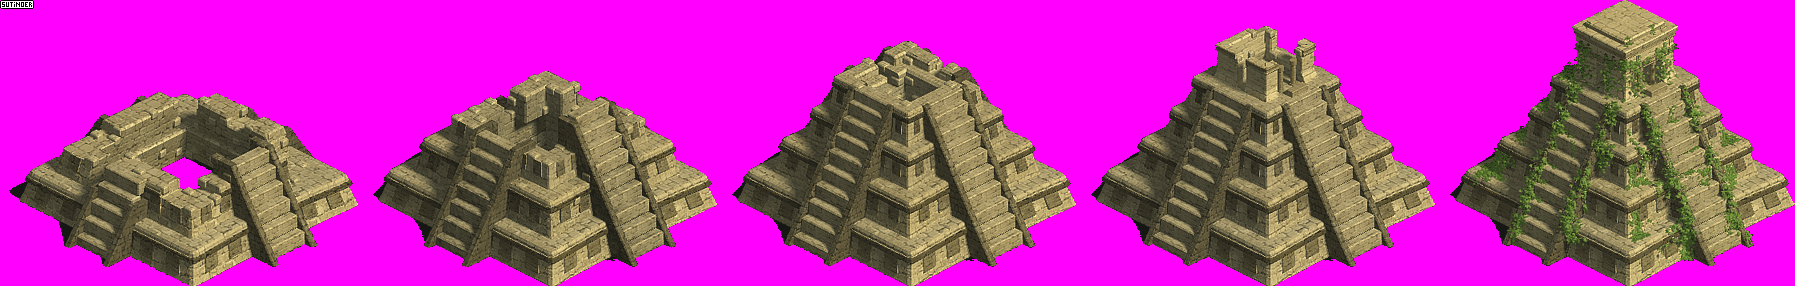 Zombie Island - Maya Pyramid